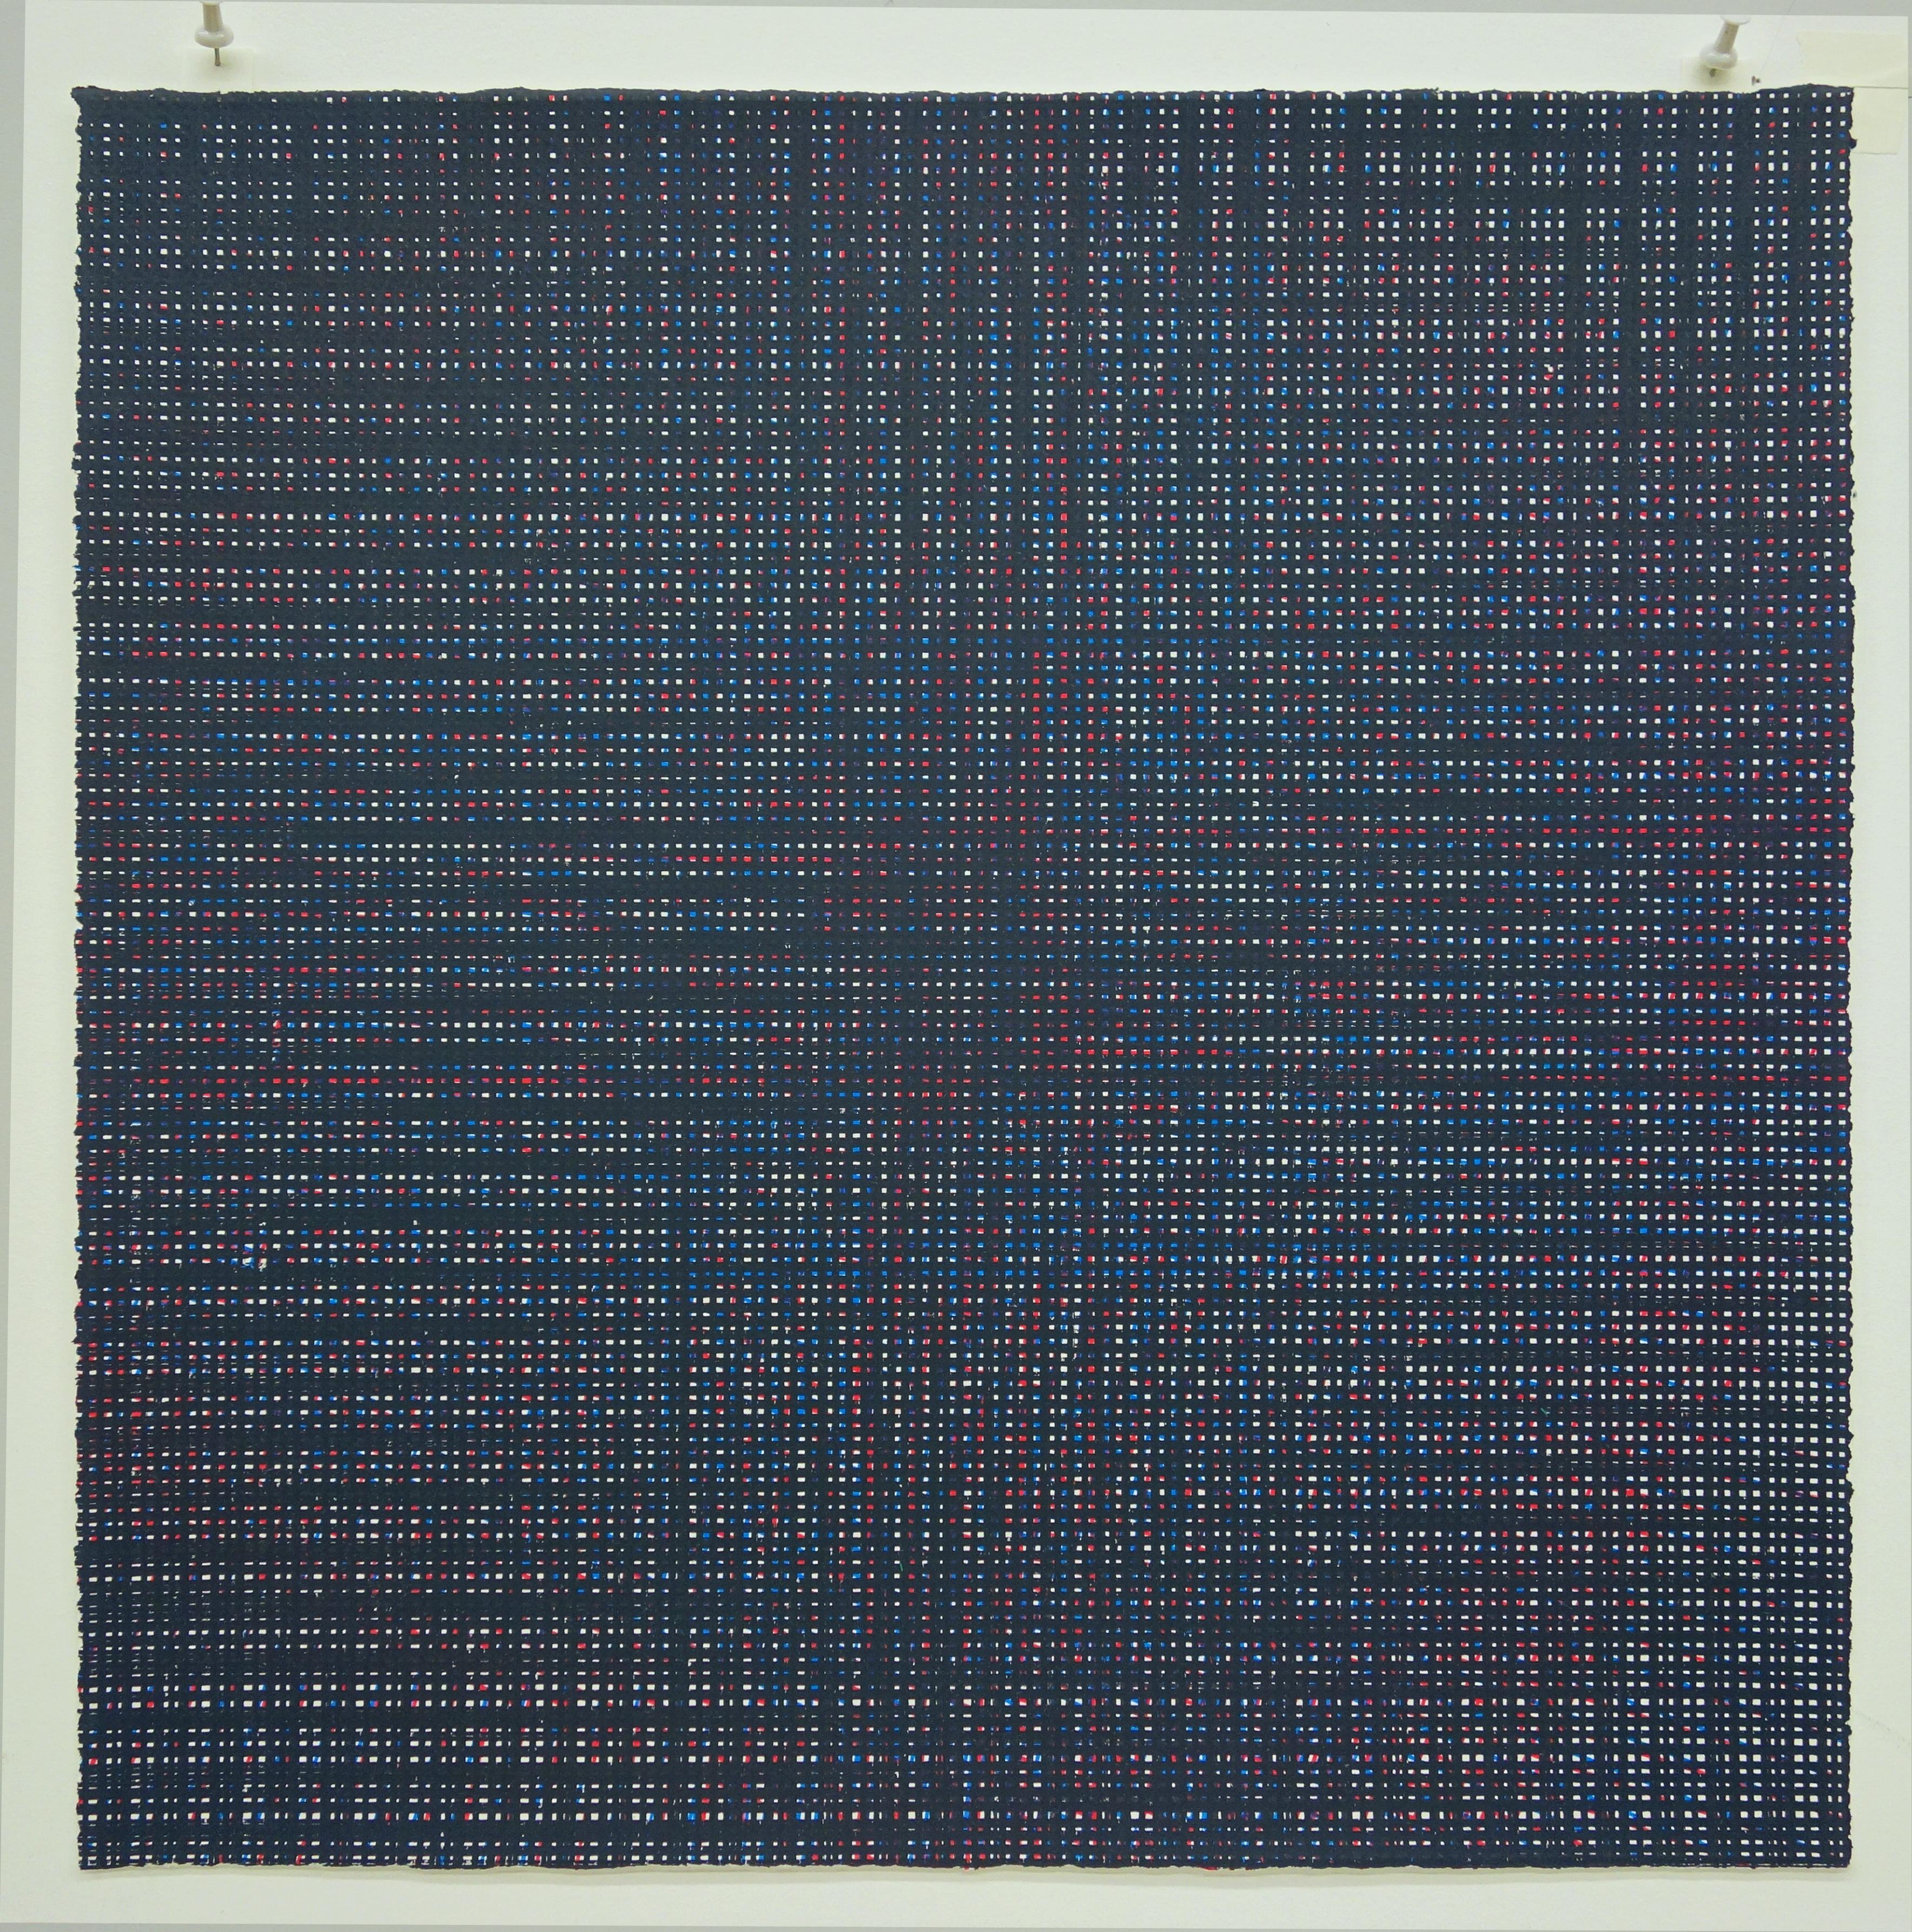 Rob de Oude, Untitled-Wassaic 1, 2016, silkscreen, 18 x 18 inches, Suite of 10 1